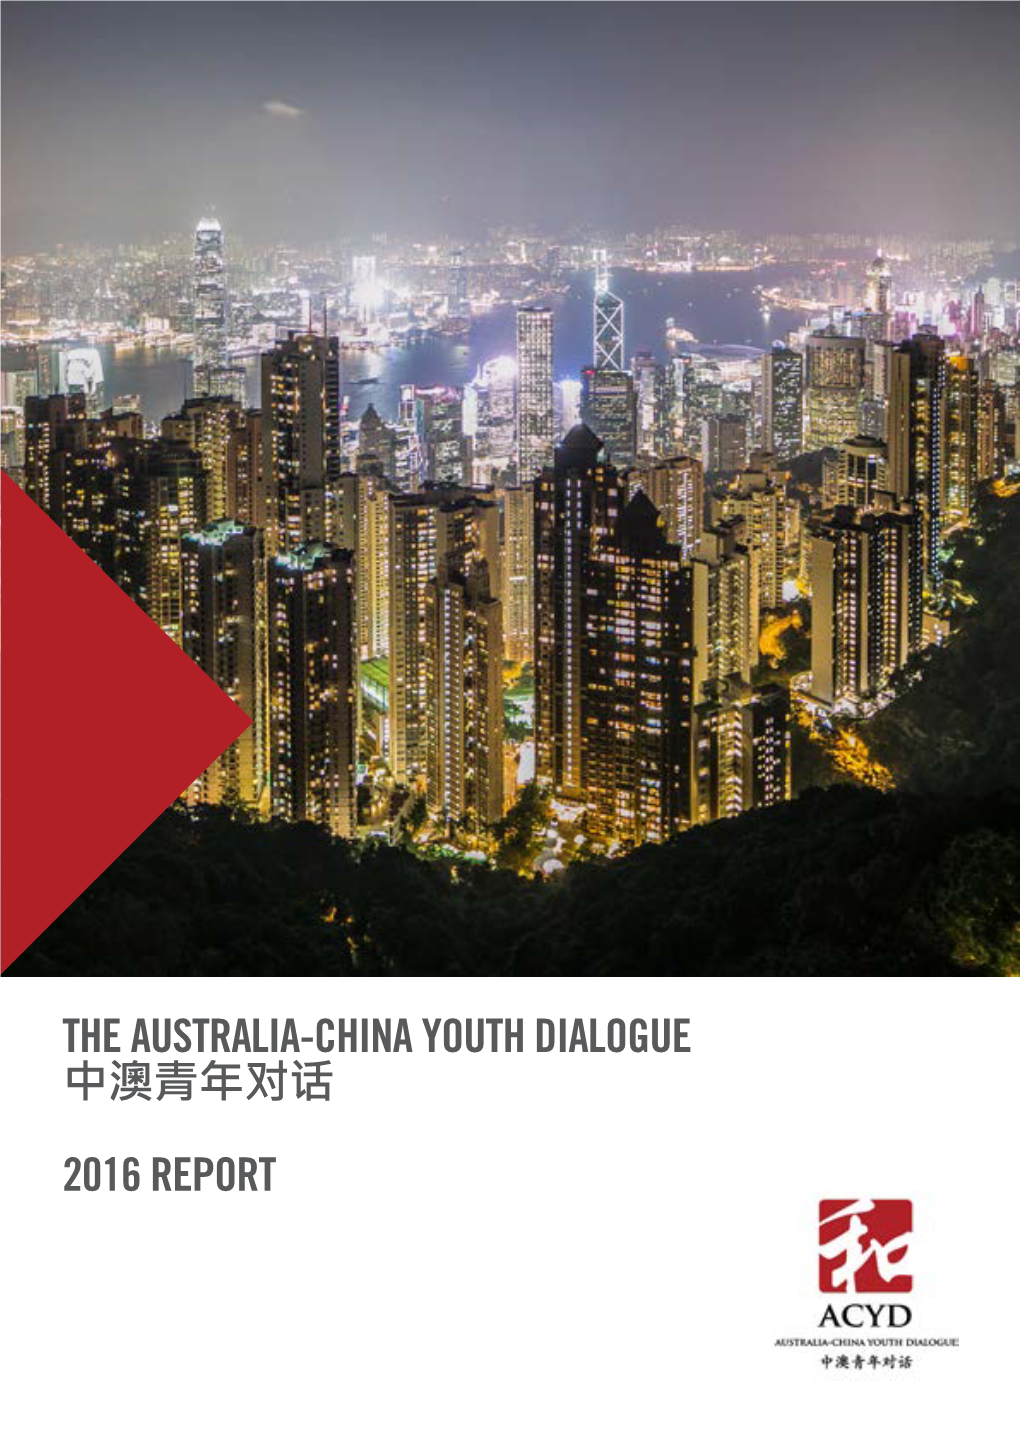 The Australia-China Youth Dialogue 中澳青年对话 2016 Report Thank You